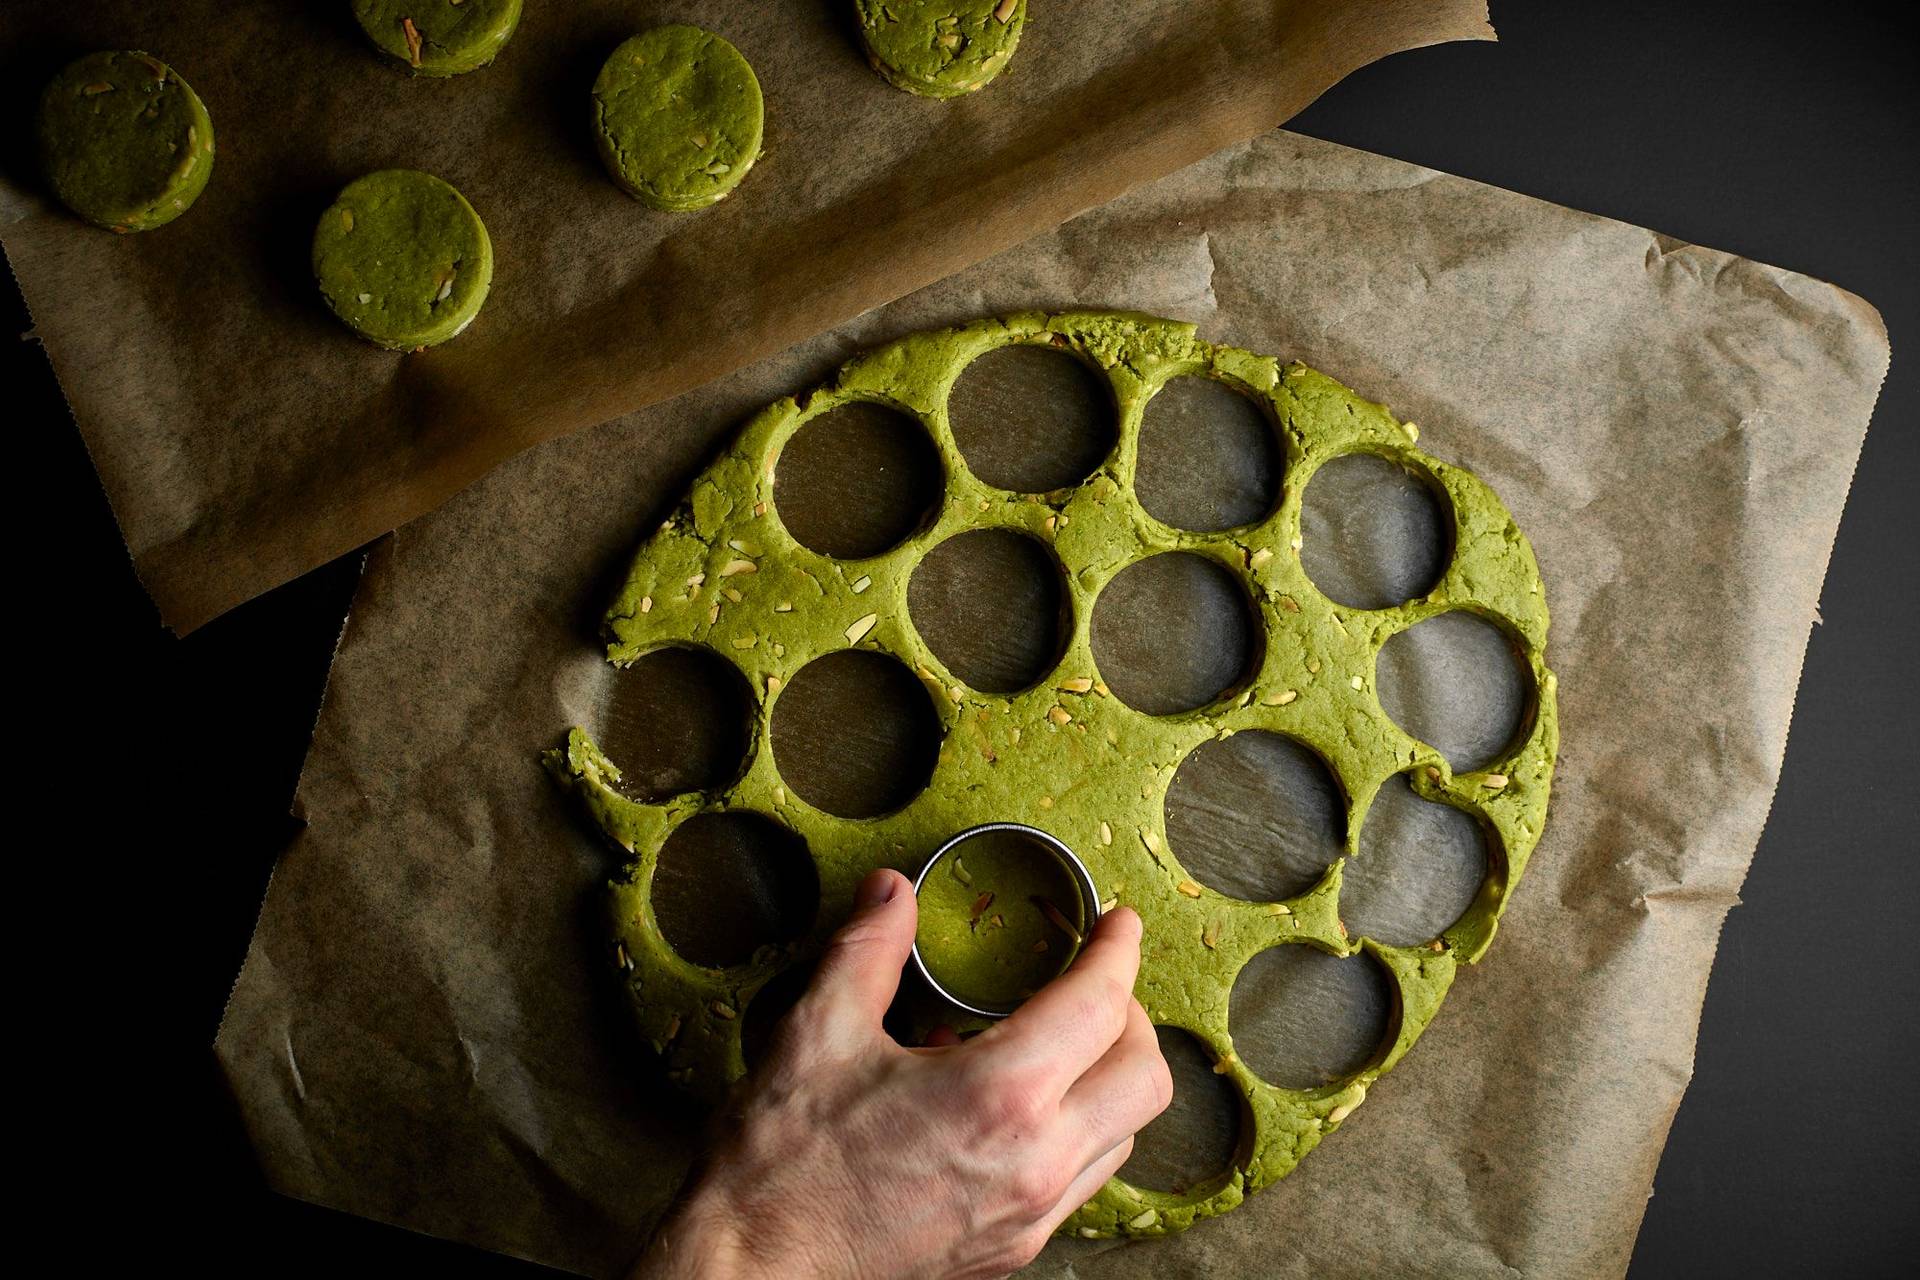 making green matcha scones on black background